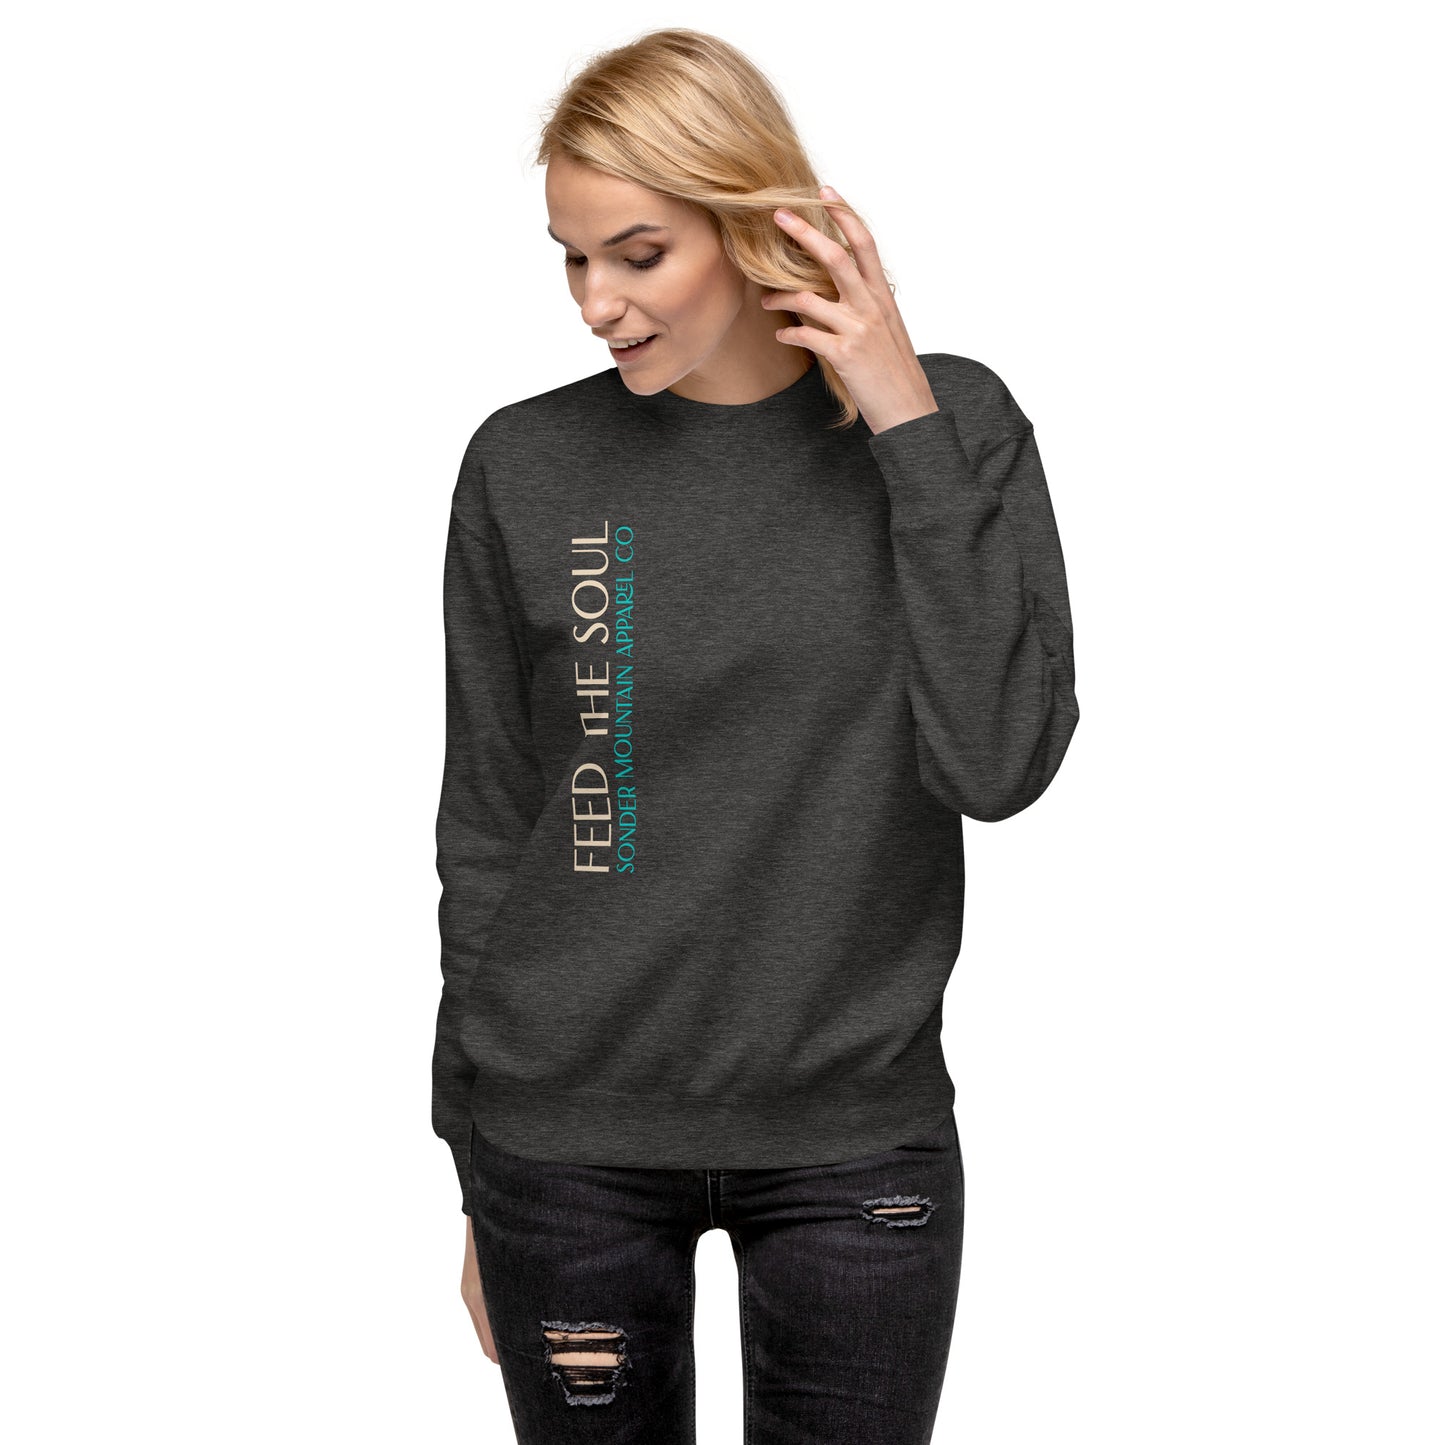 Starve The Ego - Unisex Premium Sweatshirt